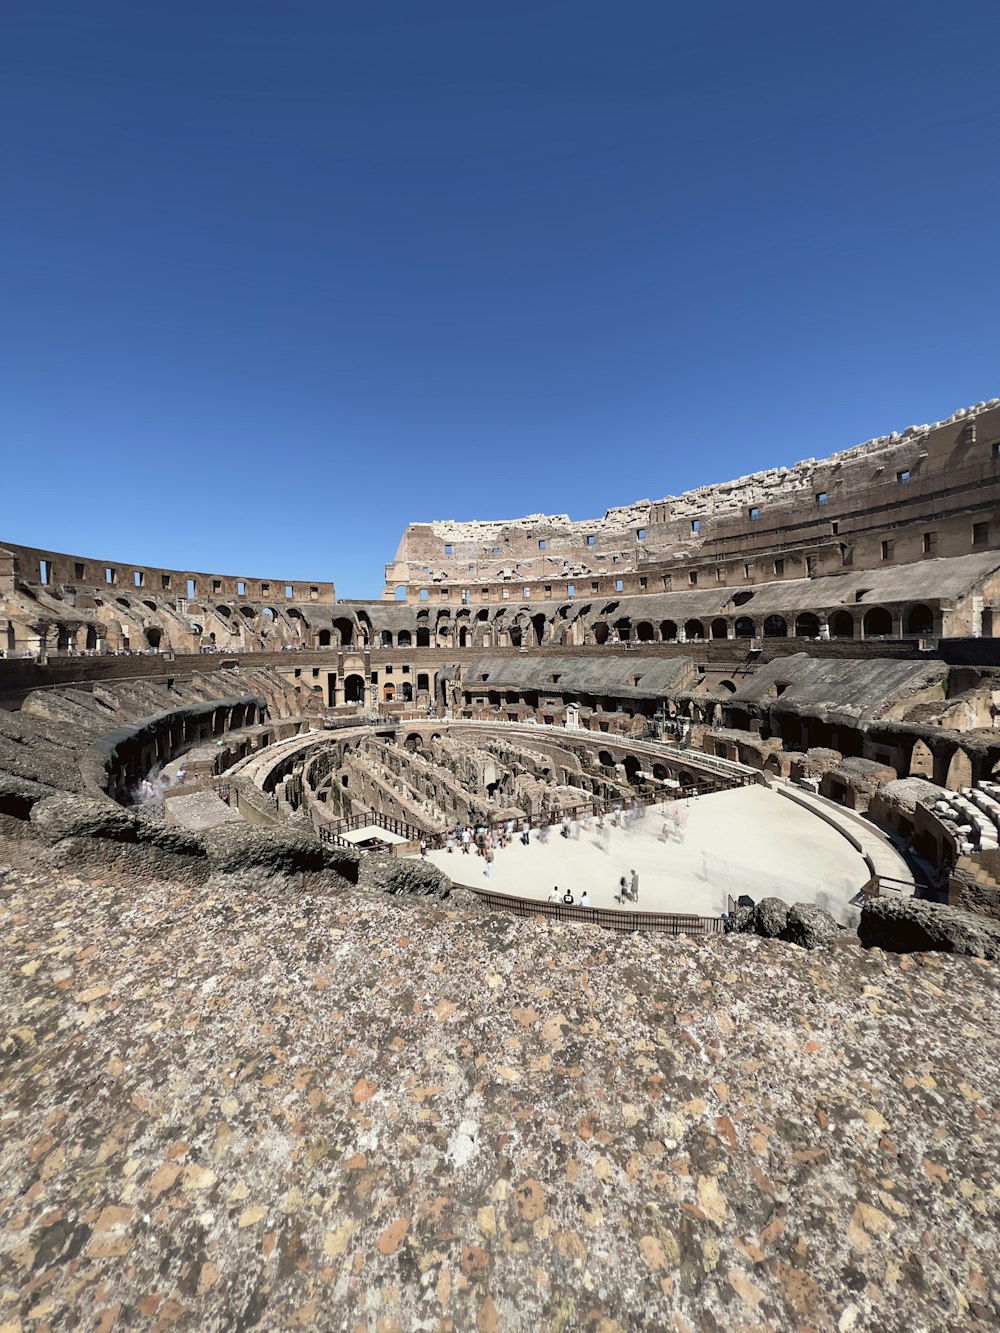 the interior of an ancient roman amphit